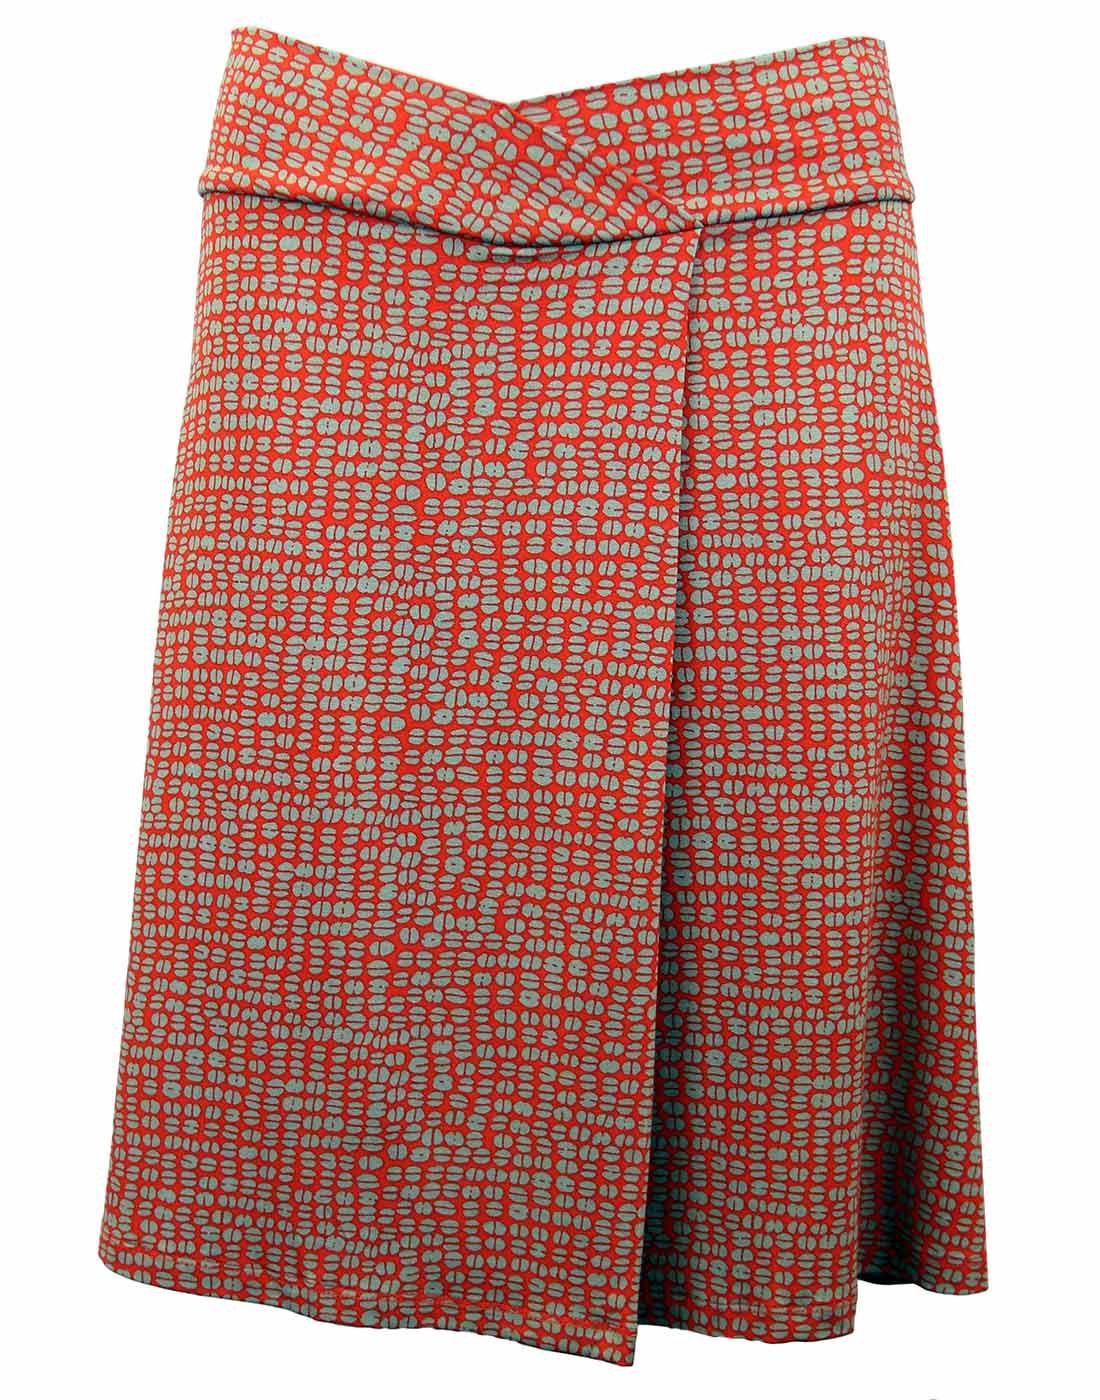 Bean VILA JOY Retro Sixties Mod A-Line Skirt (O)